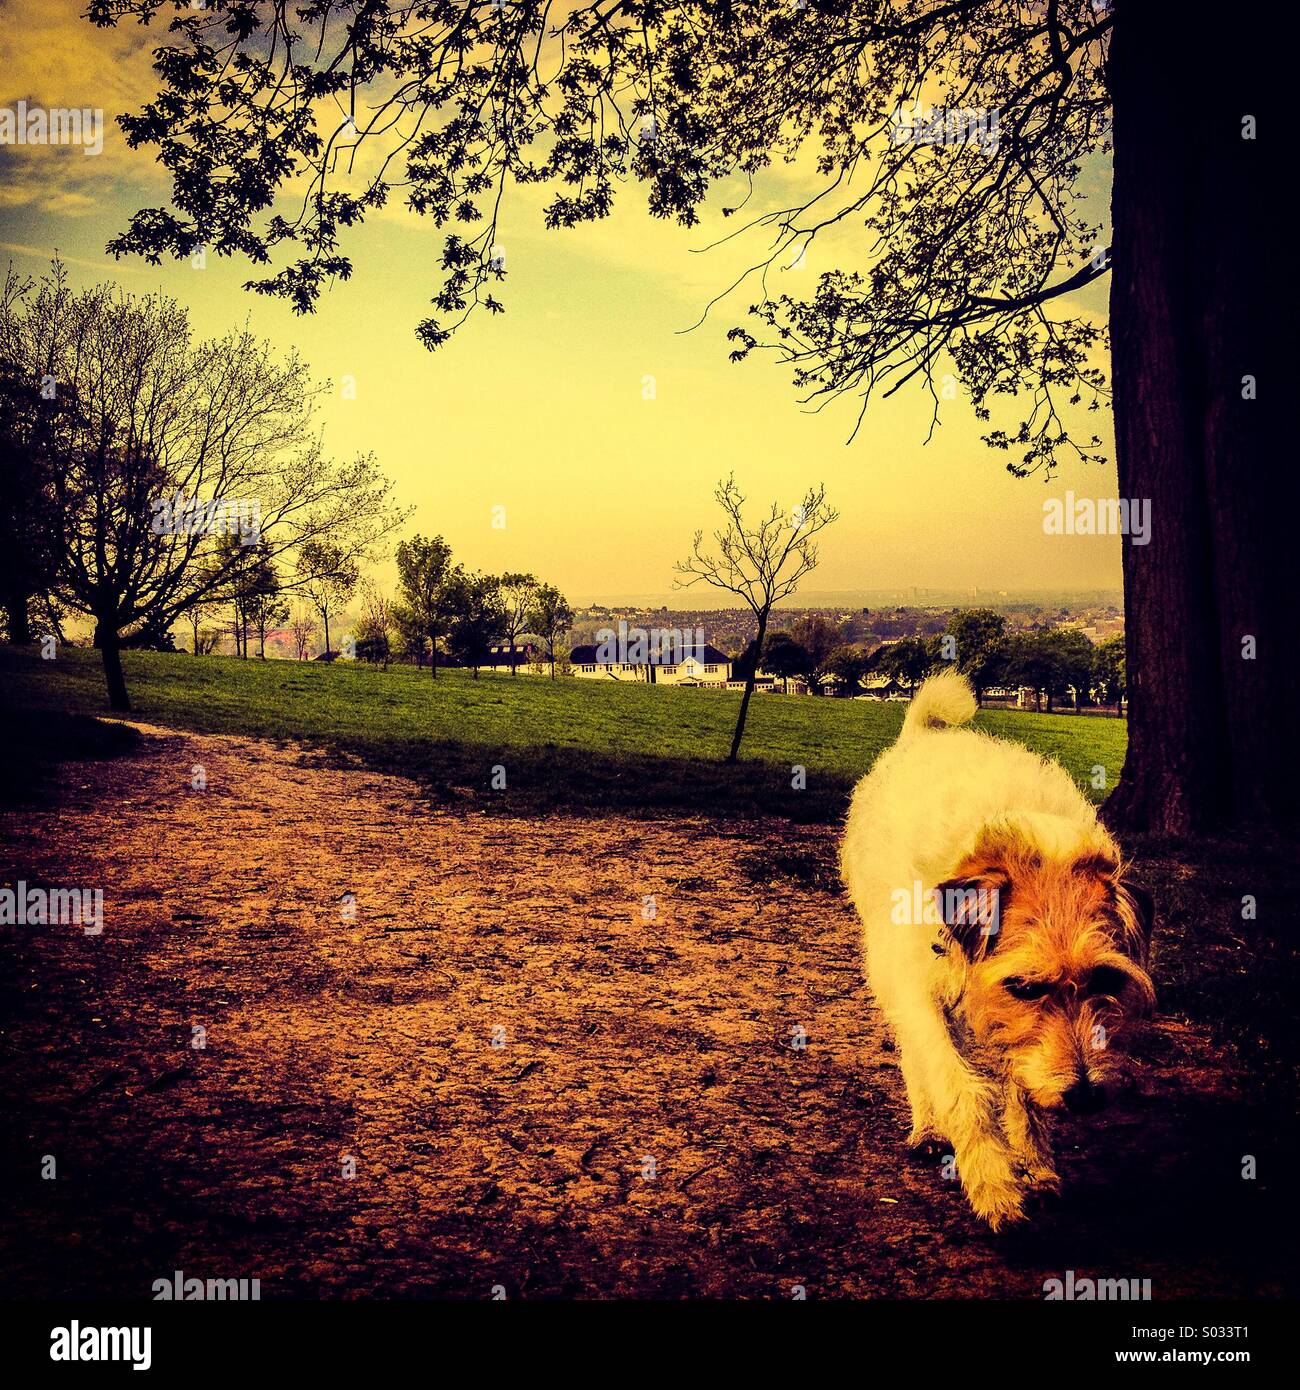 Dog plodding along path in park Stock Photo